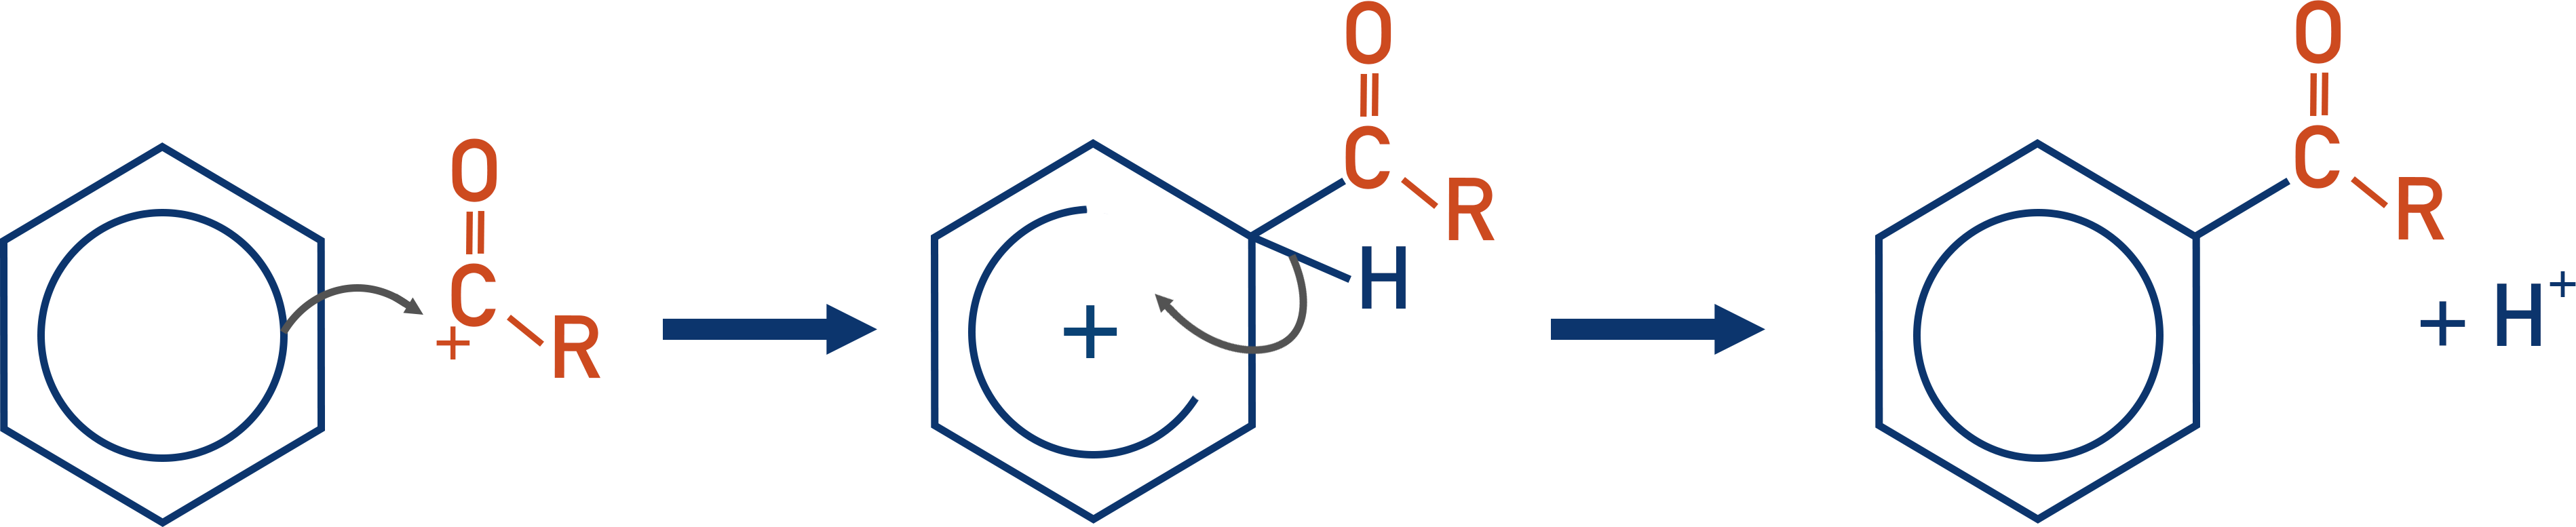 acylation of benzene mechanism electrophilic substitution